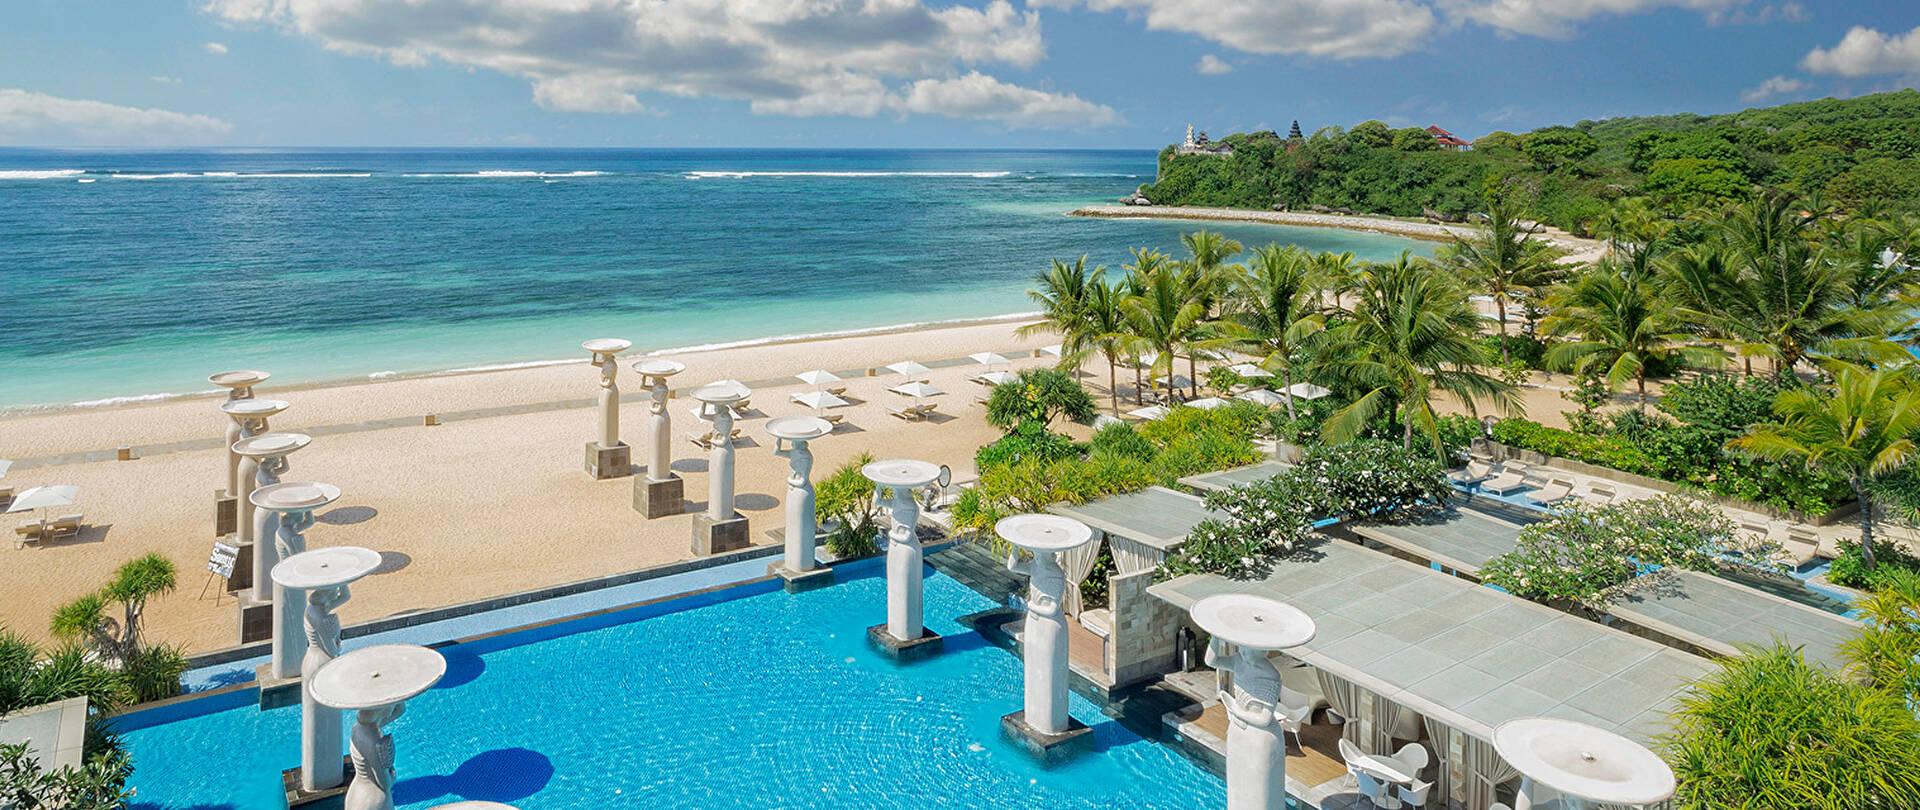 Splashing Surprise Party | The Mulia, Mulia Resort & Villas - Nusa Dua, Bali